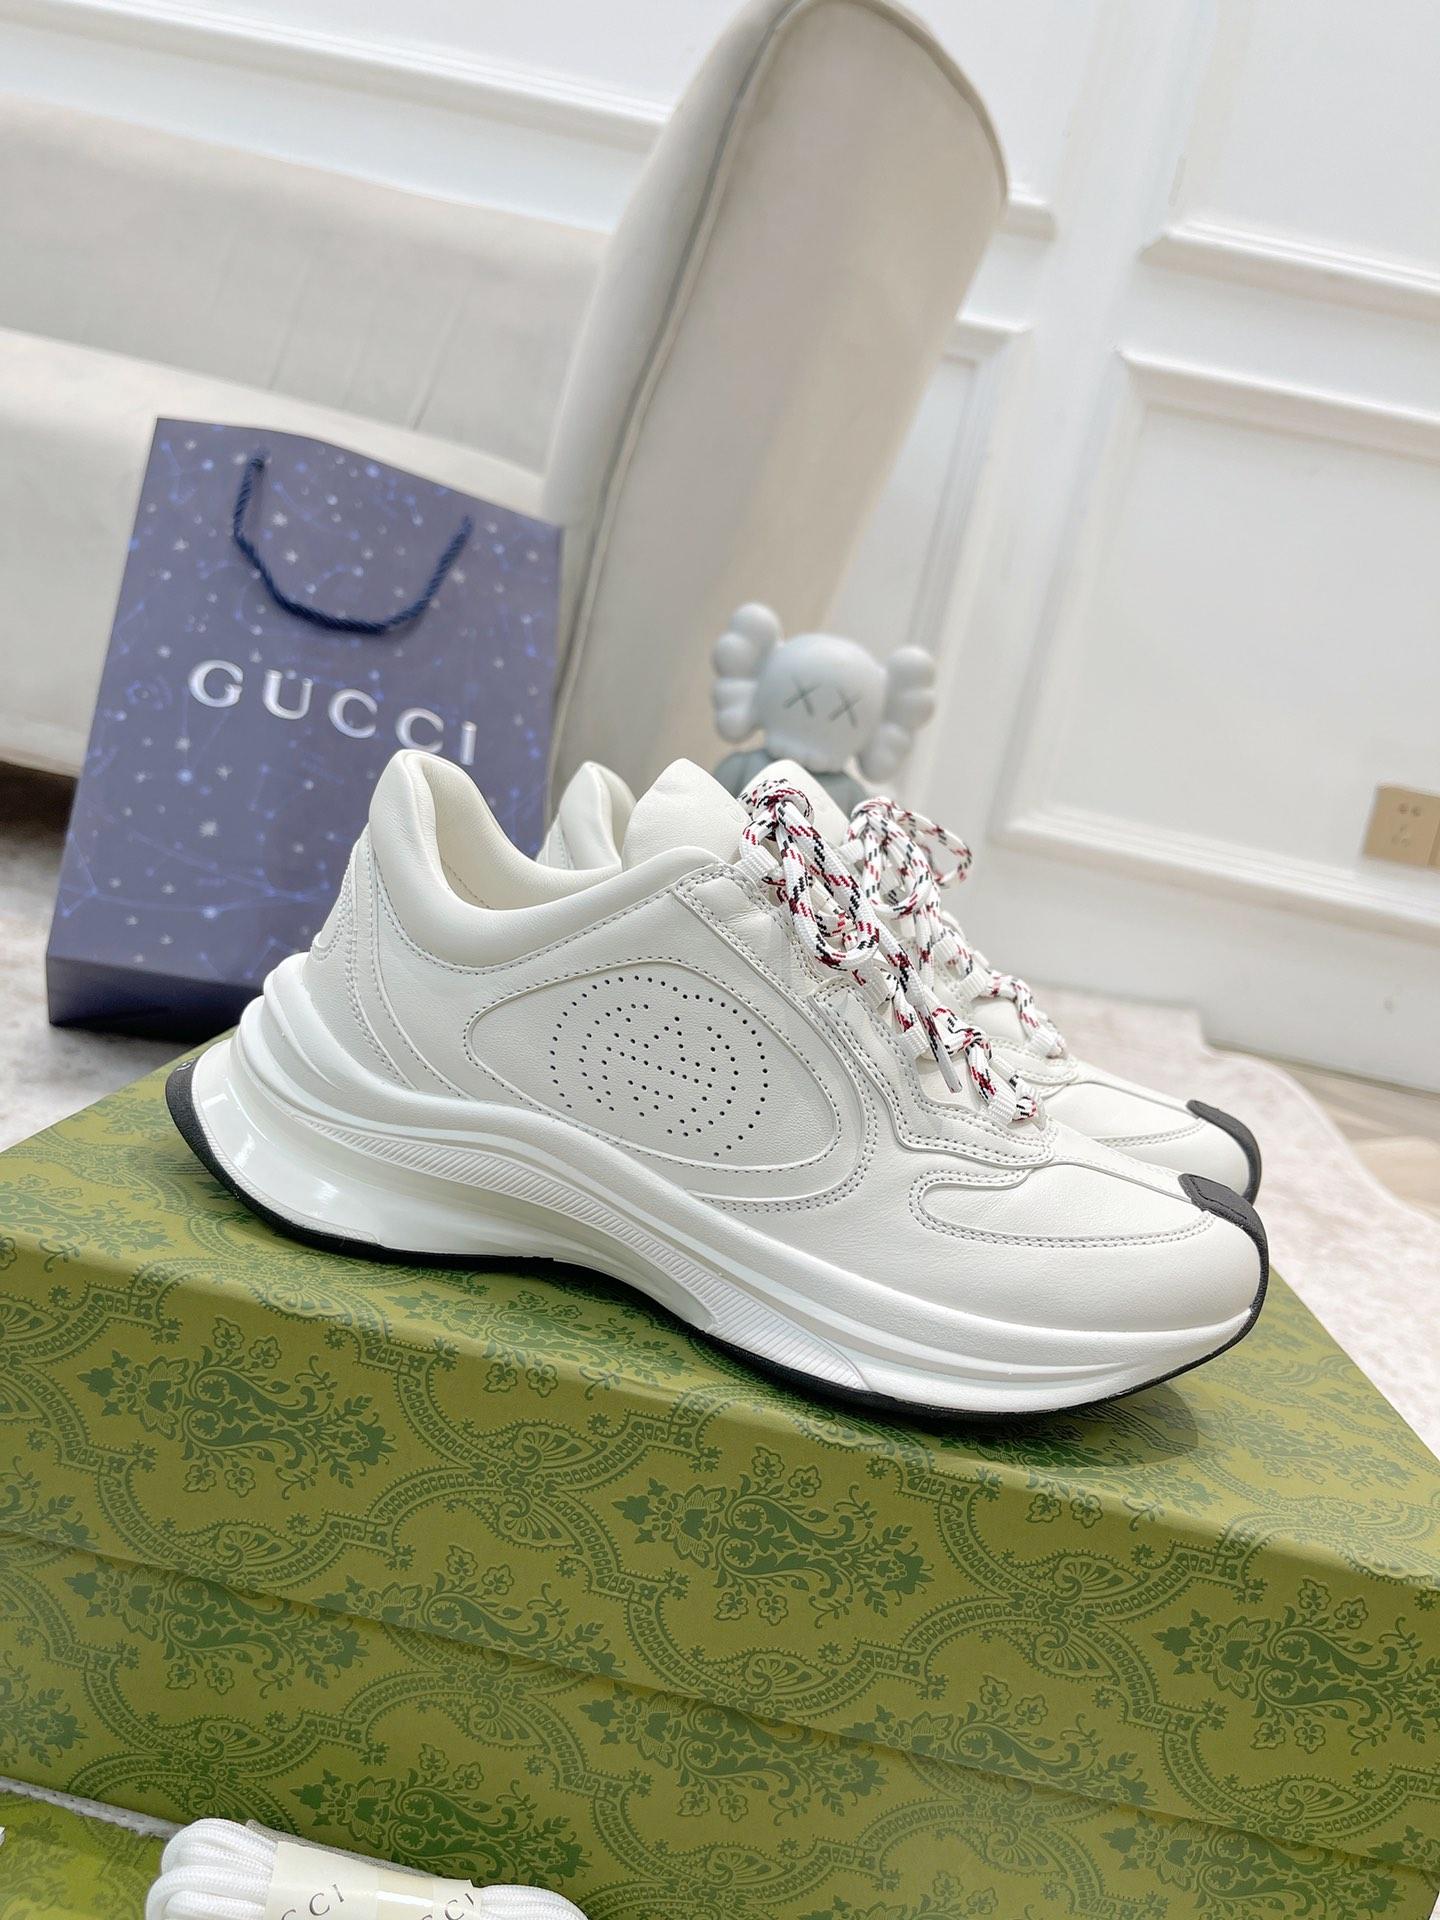 gucci-run-sneaker-7292_16844049752-1000